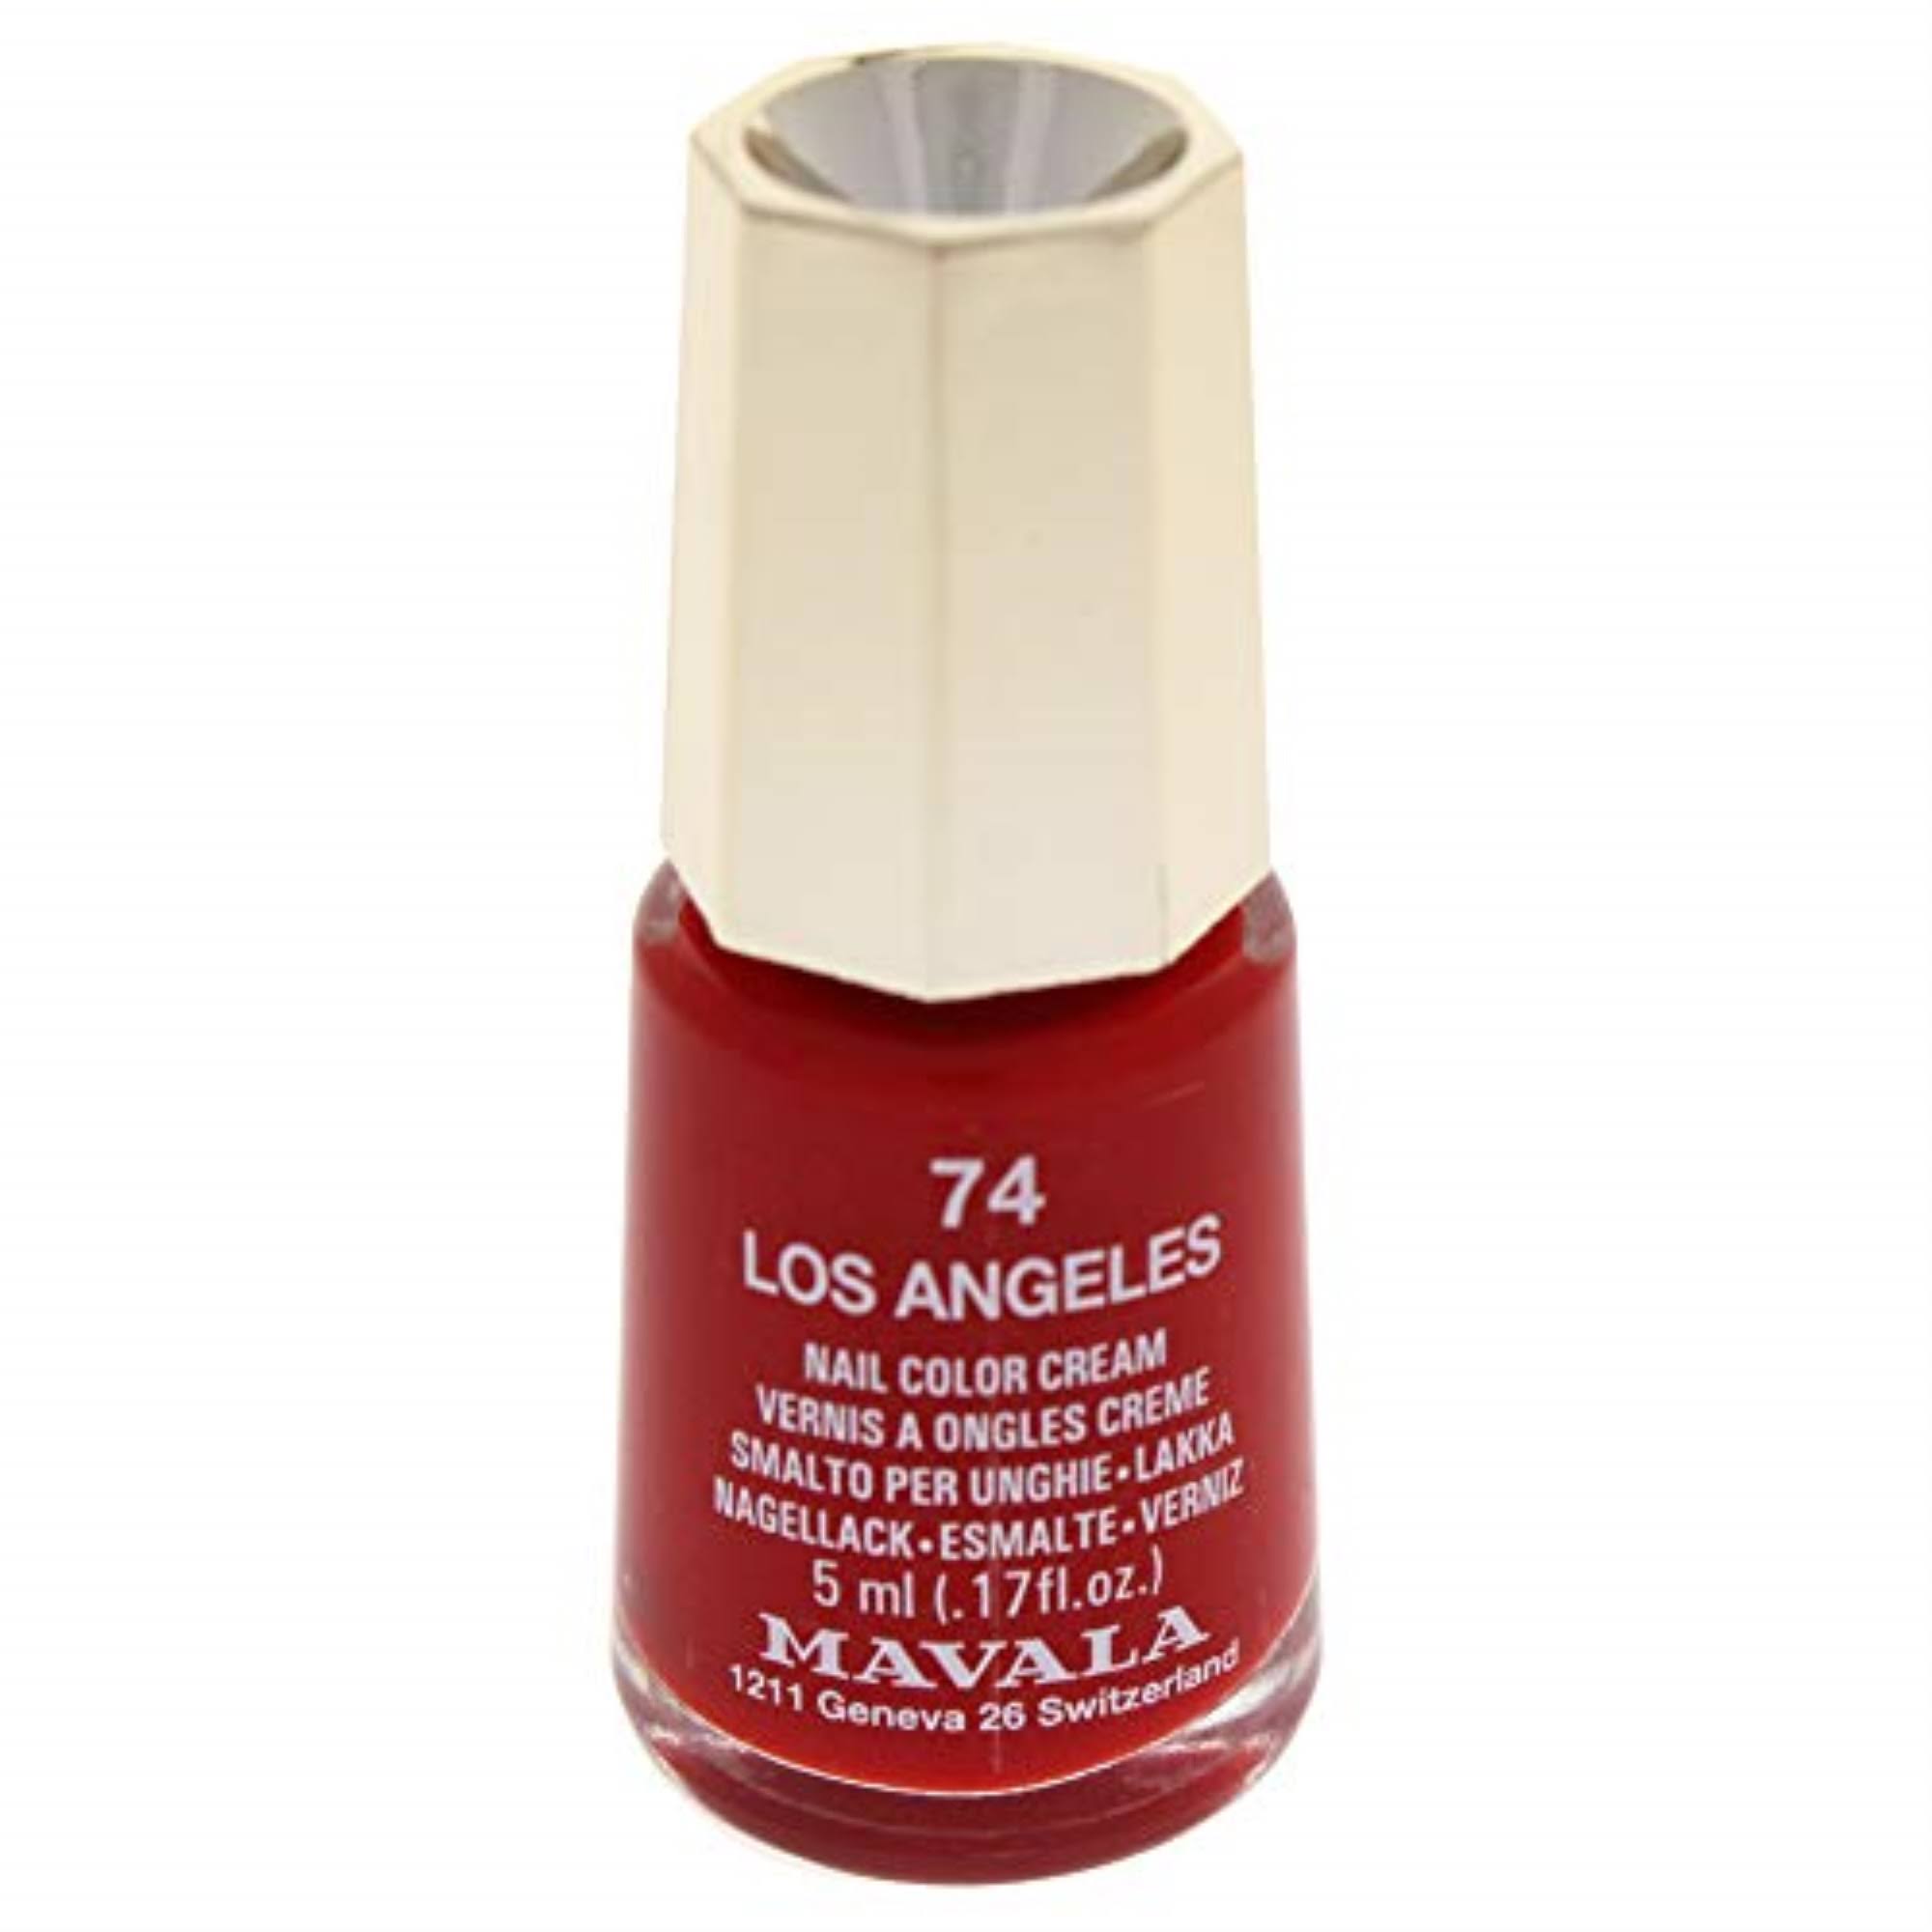 Mavala Nail Color Cream - 74 Los Angeles